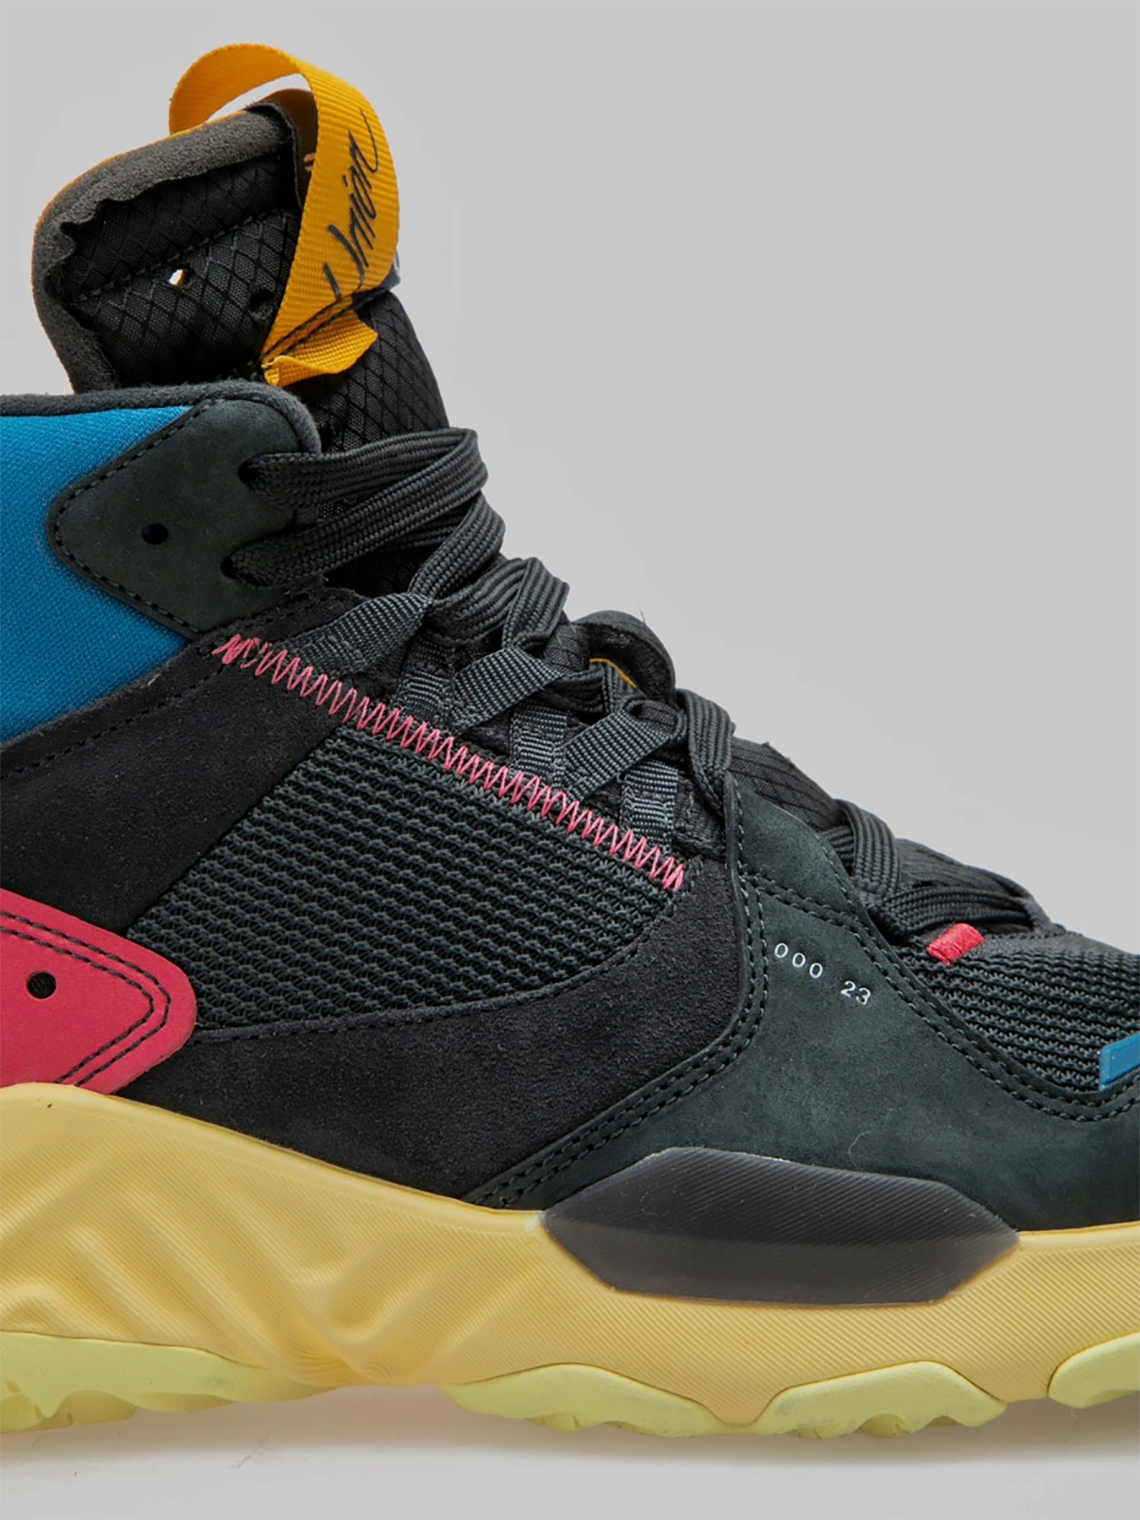 Union Jordan 4 Collection - Official Release Info | SneakerNews.com